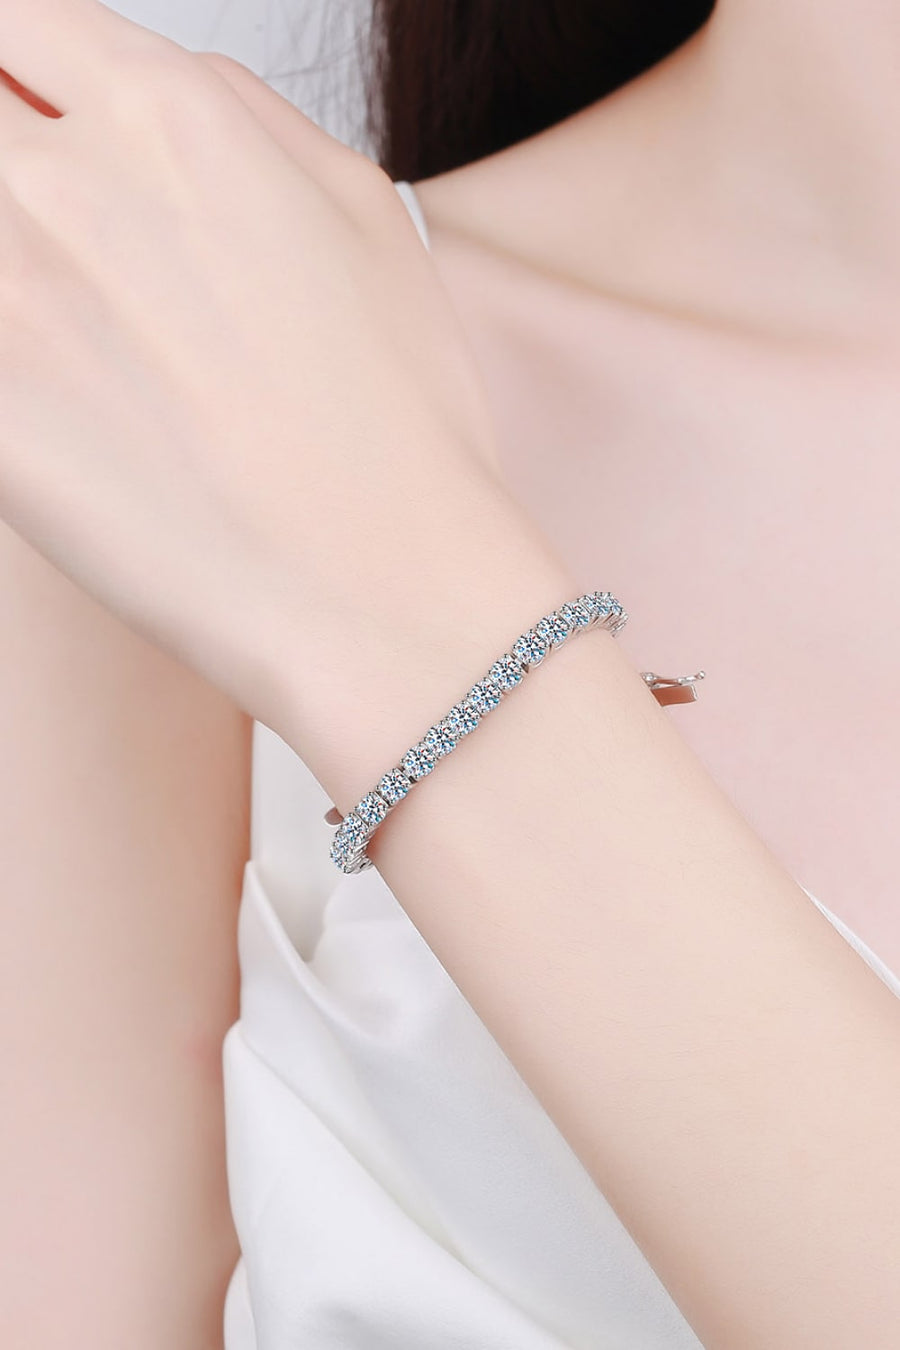 1# BEST Diamond Tennis Chain Bracelet Jewelry Gifts for Women | #1 Best Most Top Trendy Trending 4.9 Carat Diamond Bracelet Gift for Women, Ladies, Mother | MASON New York